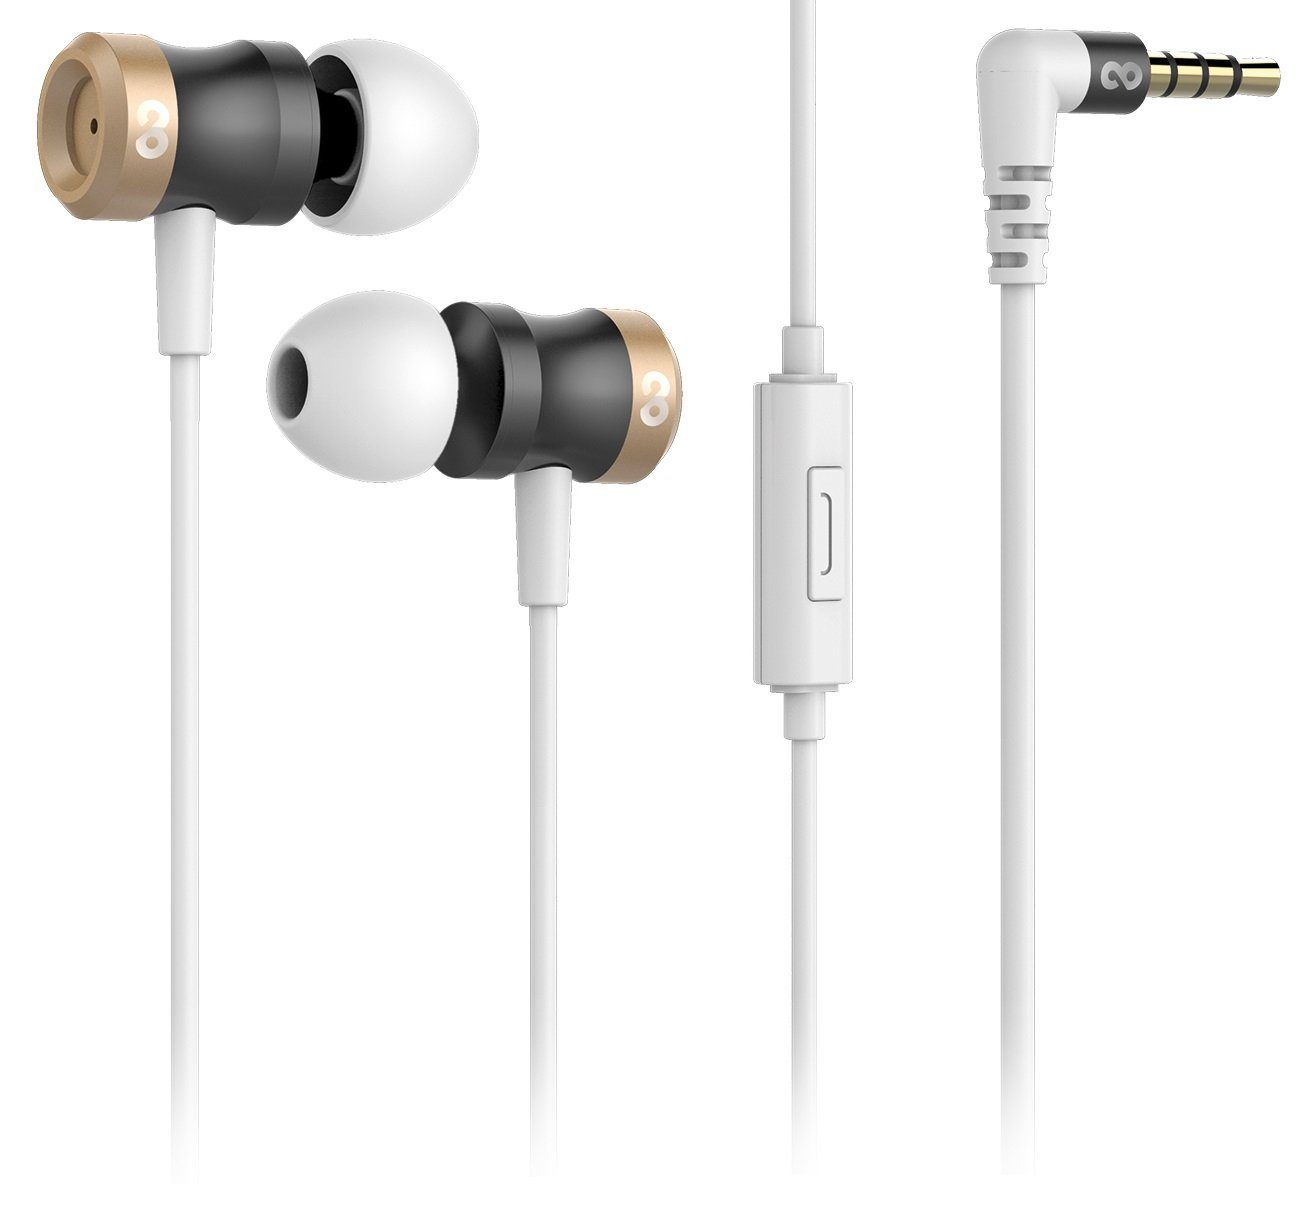 / (In-Ear In-Ear-Kopfhörer conecto In-Ear gold Ohrpassstücken conecto mit Earphones Headset) Ohrhörer, 3 (optional: Kopfhörer